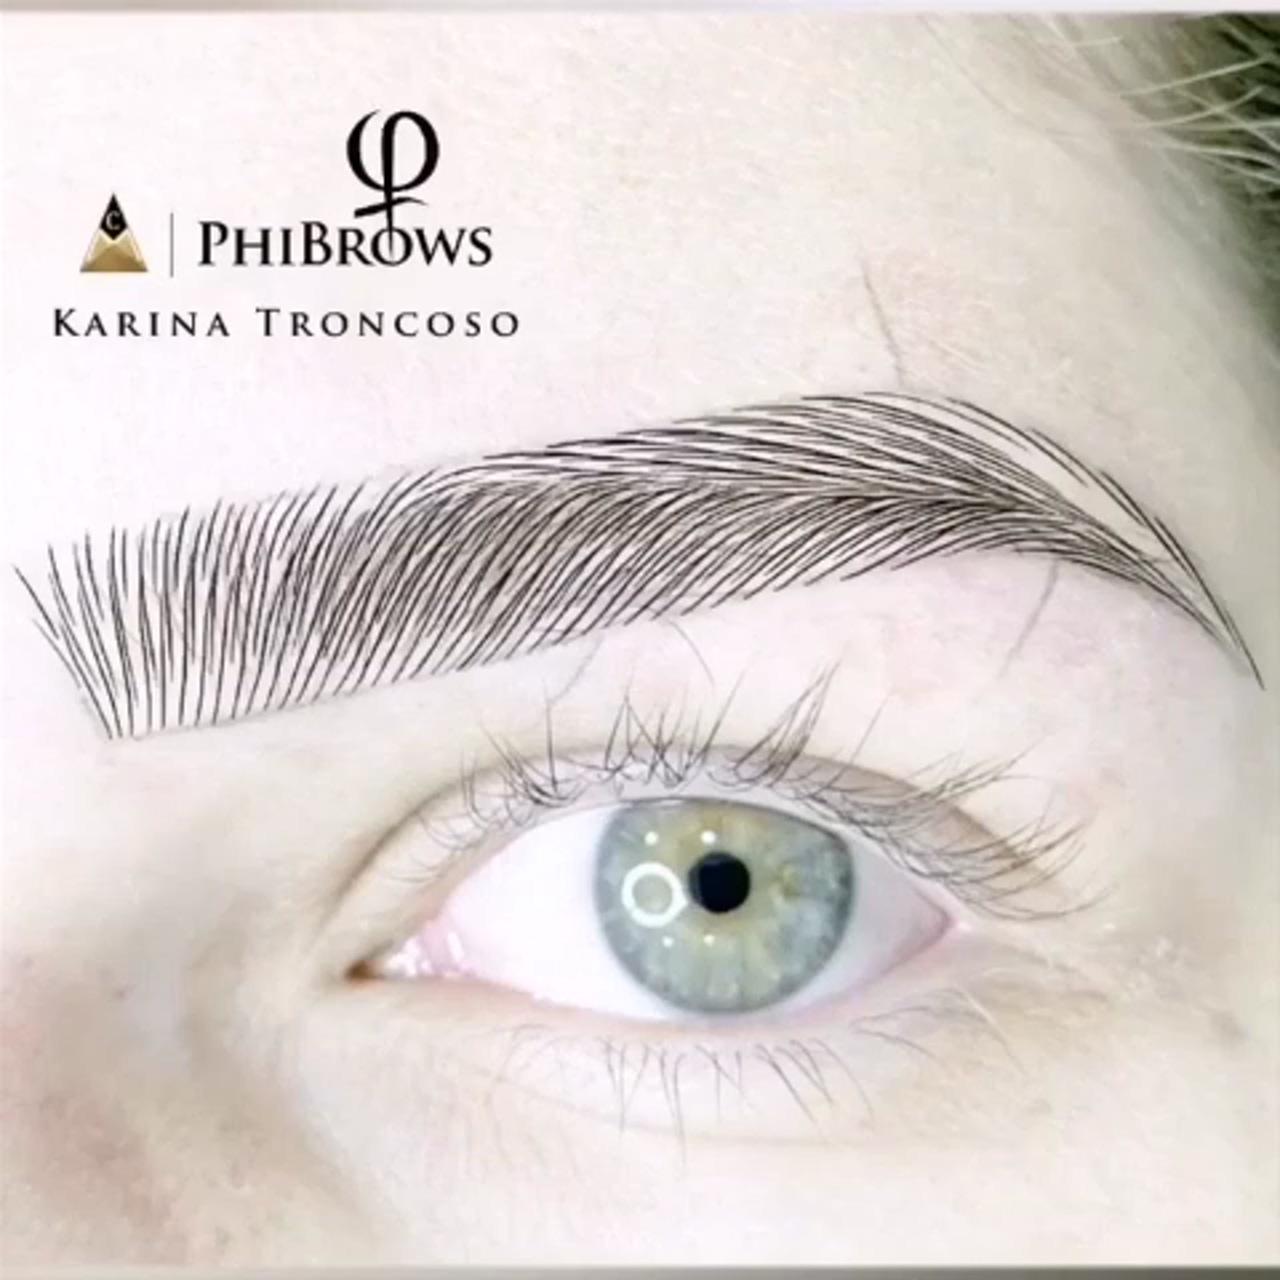 Phi brows microblading tutorial; eyebrow makeup tutorial